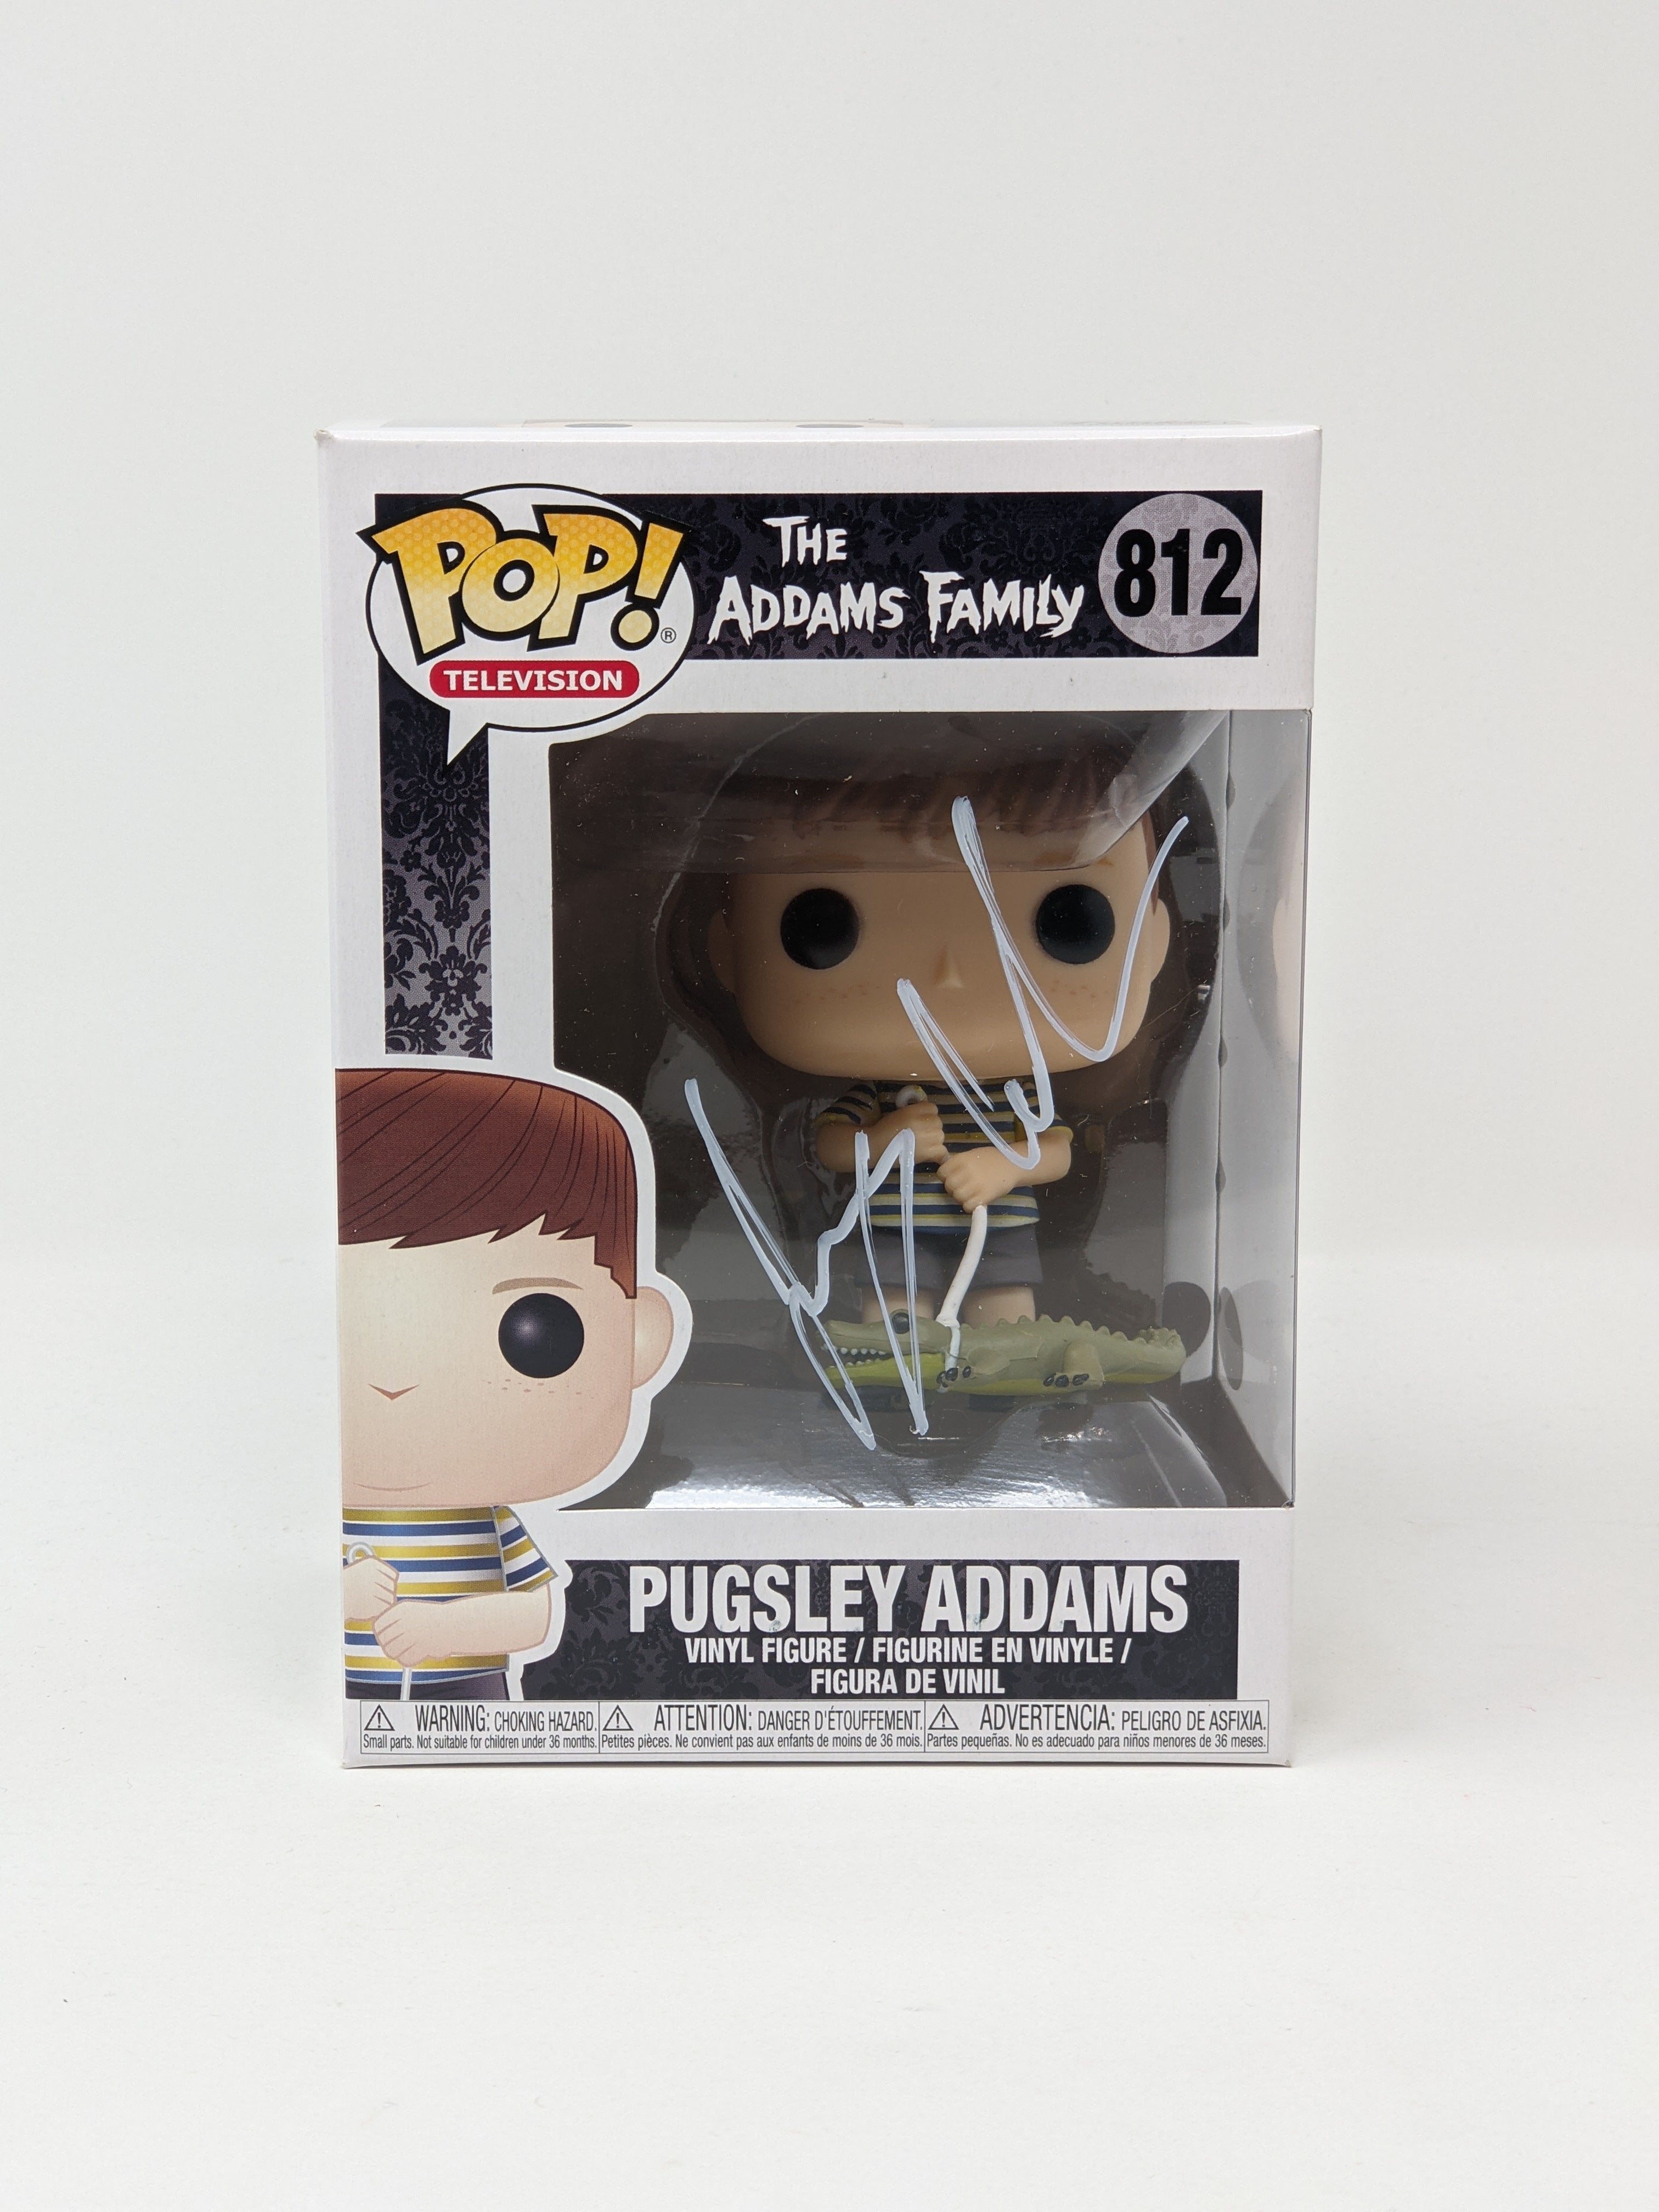 Jimmy Workman Addams Family Pugsley Addams #812 Signed Funko Pop JSA COA Certified Autograph